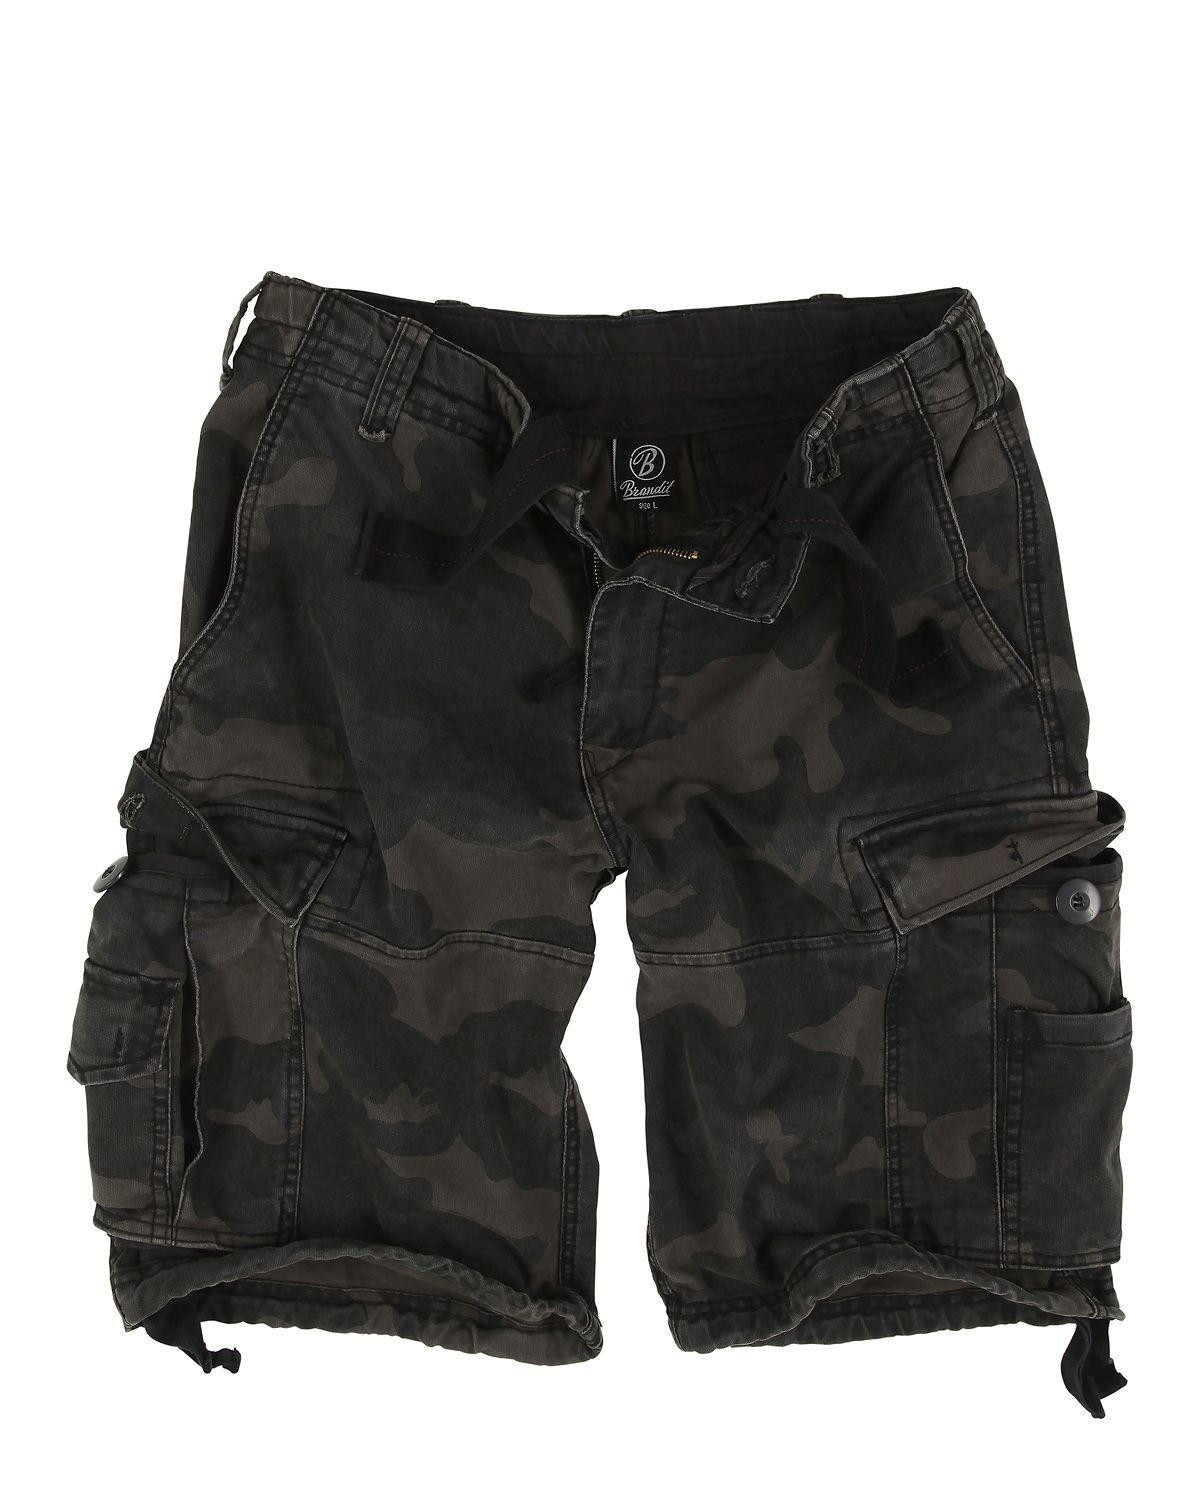 Brandit Vintage Shorts (Black Camo, XL)